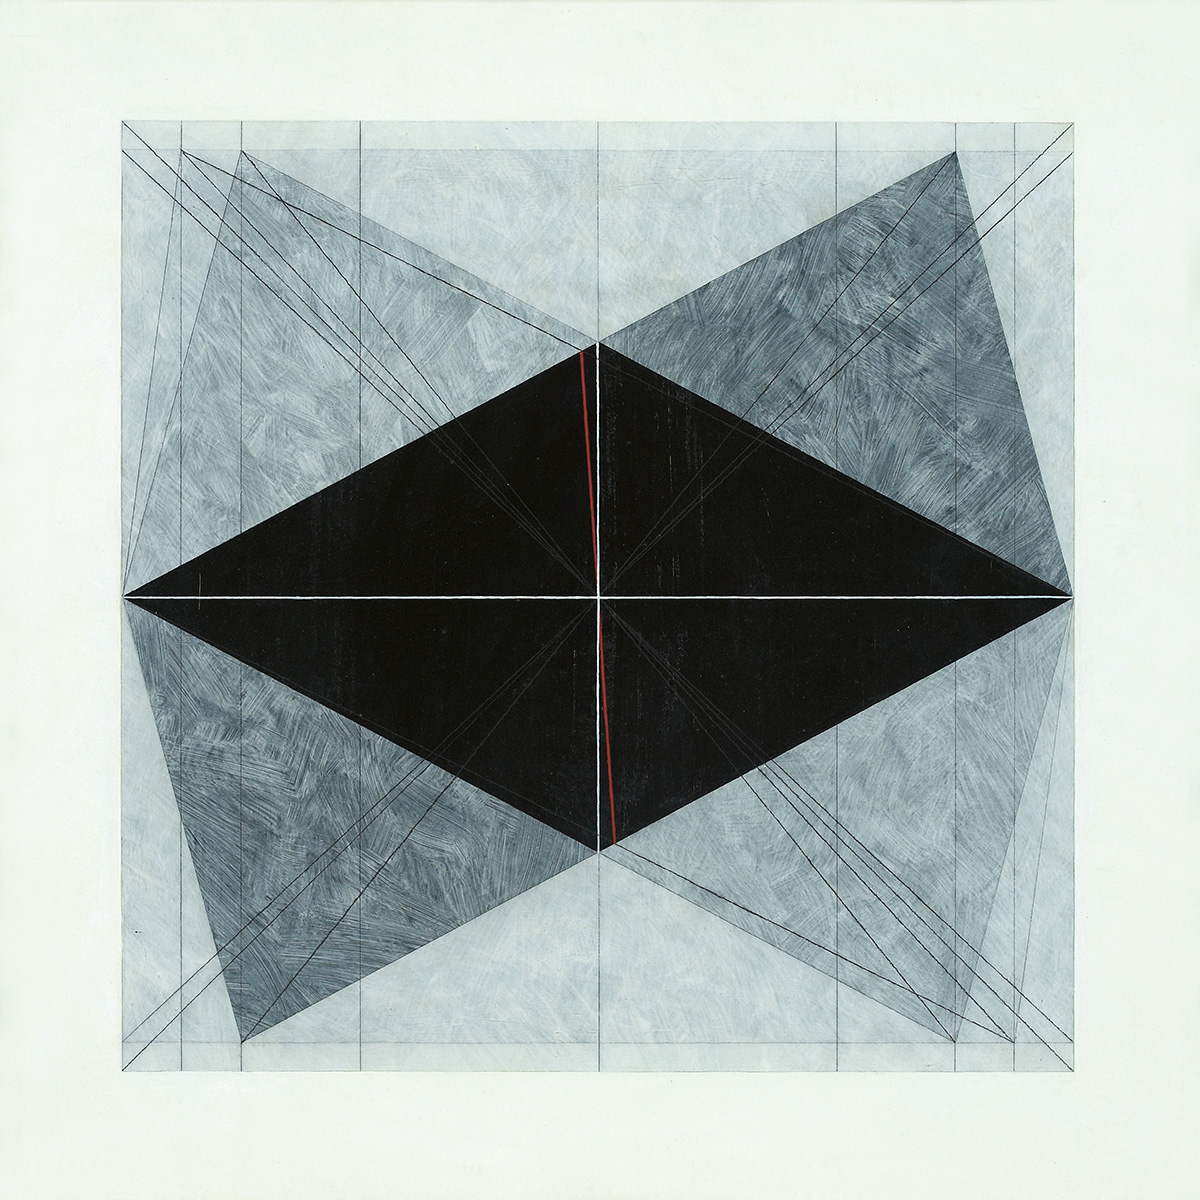 Strukturanalysen zu Mirakel (3), 1986/198965 x 65 cmAcrylic, graphite on drawing board; framed in museum glass